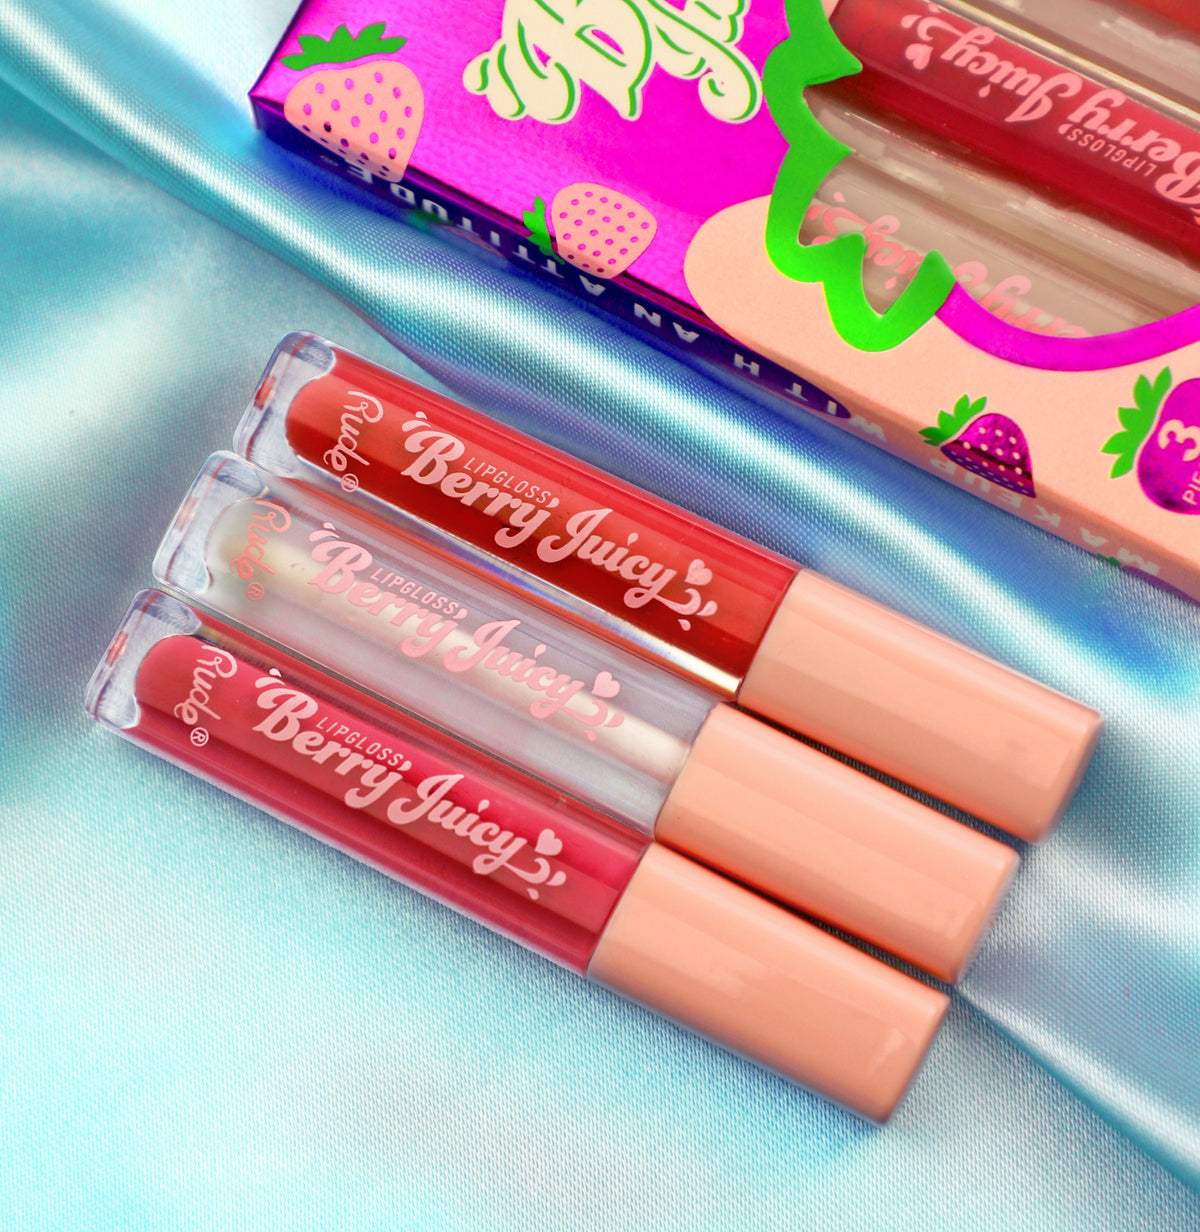 RUDE Cosmetics Berry Juicy Lip Gloss